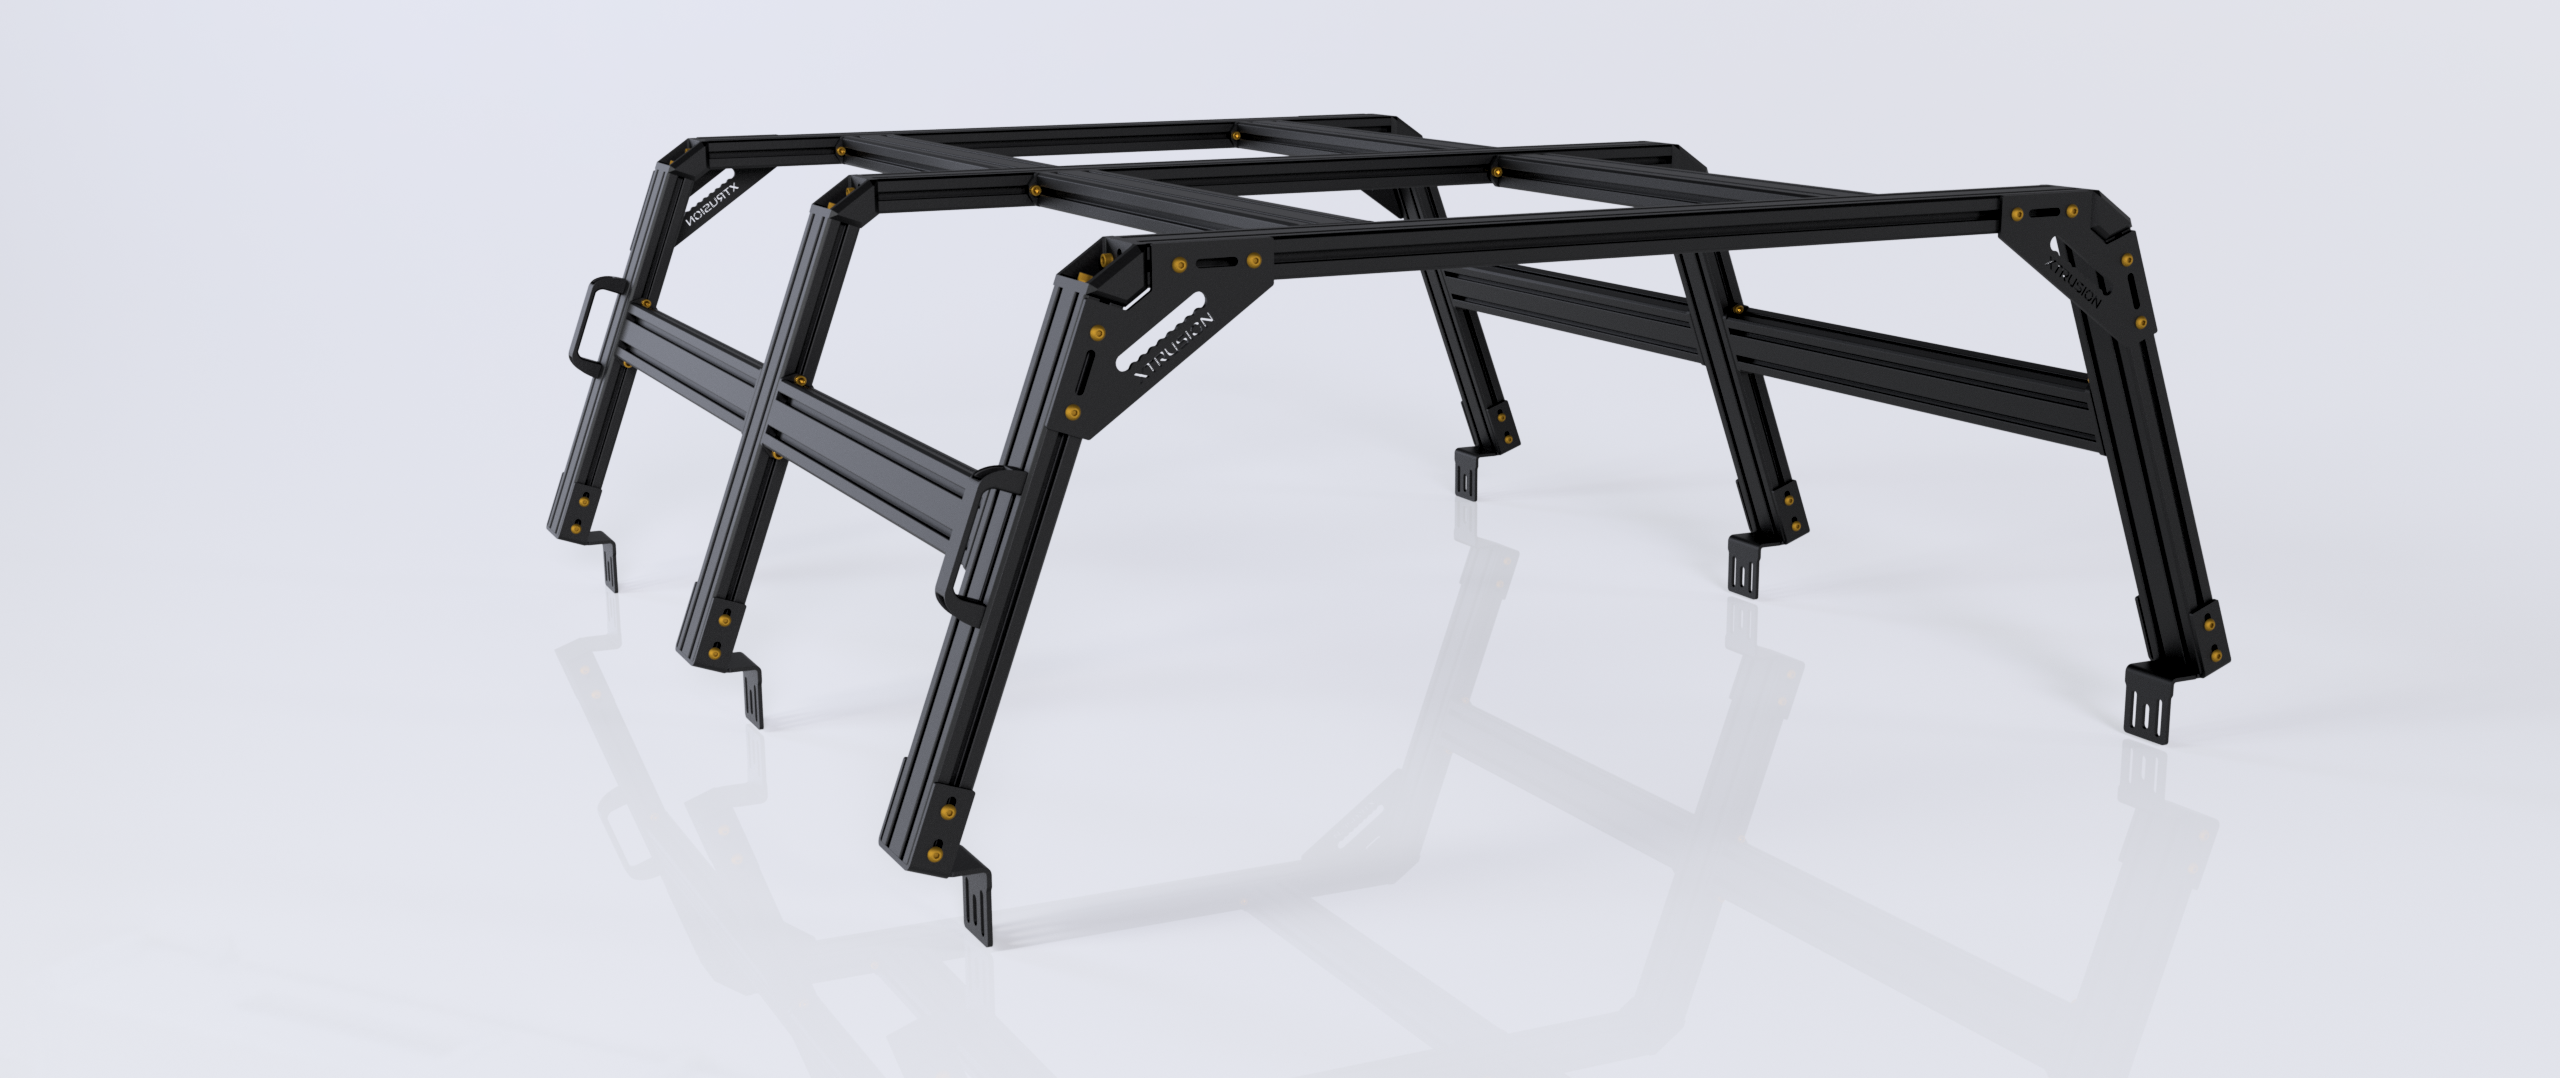 XTR3 Build-Your-Own Bed Rack - Nissan Titan